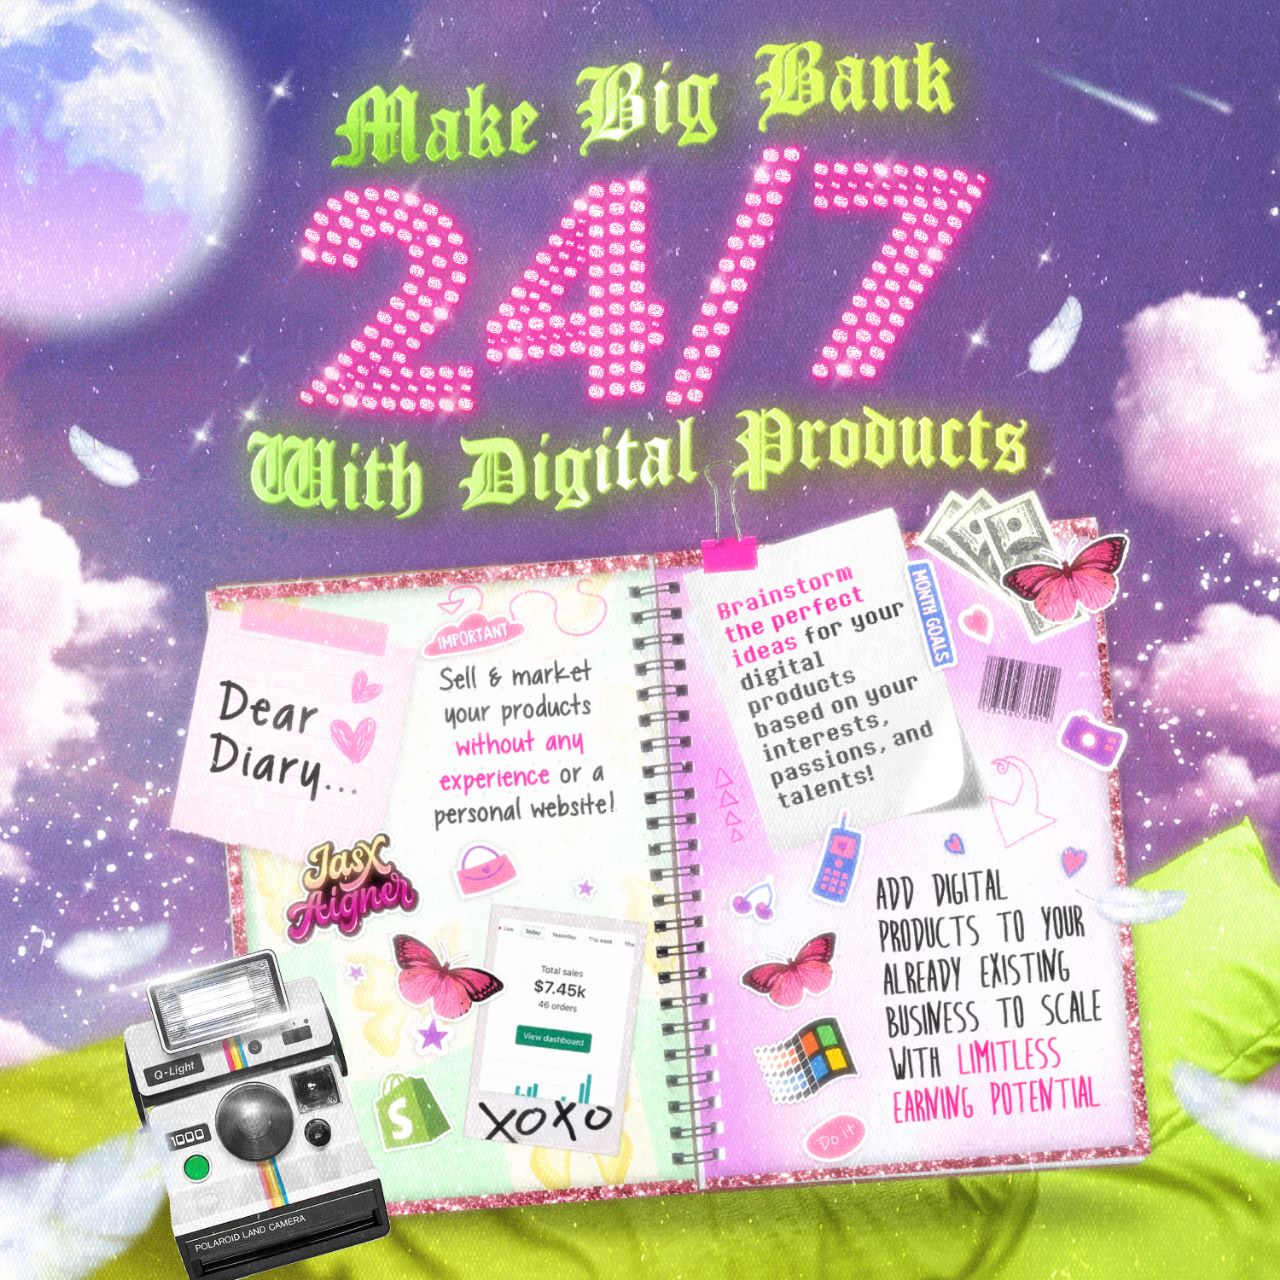 Make Big Bank 24/7 - Digital Products Webinar Replay